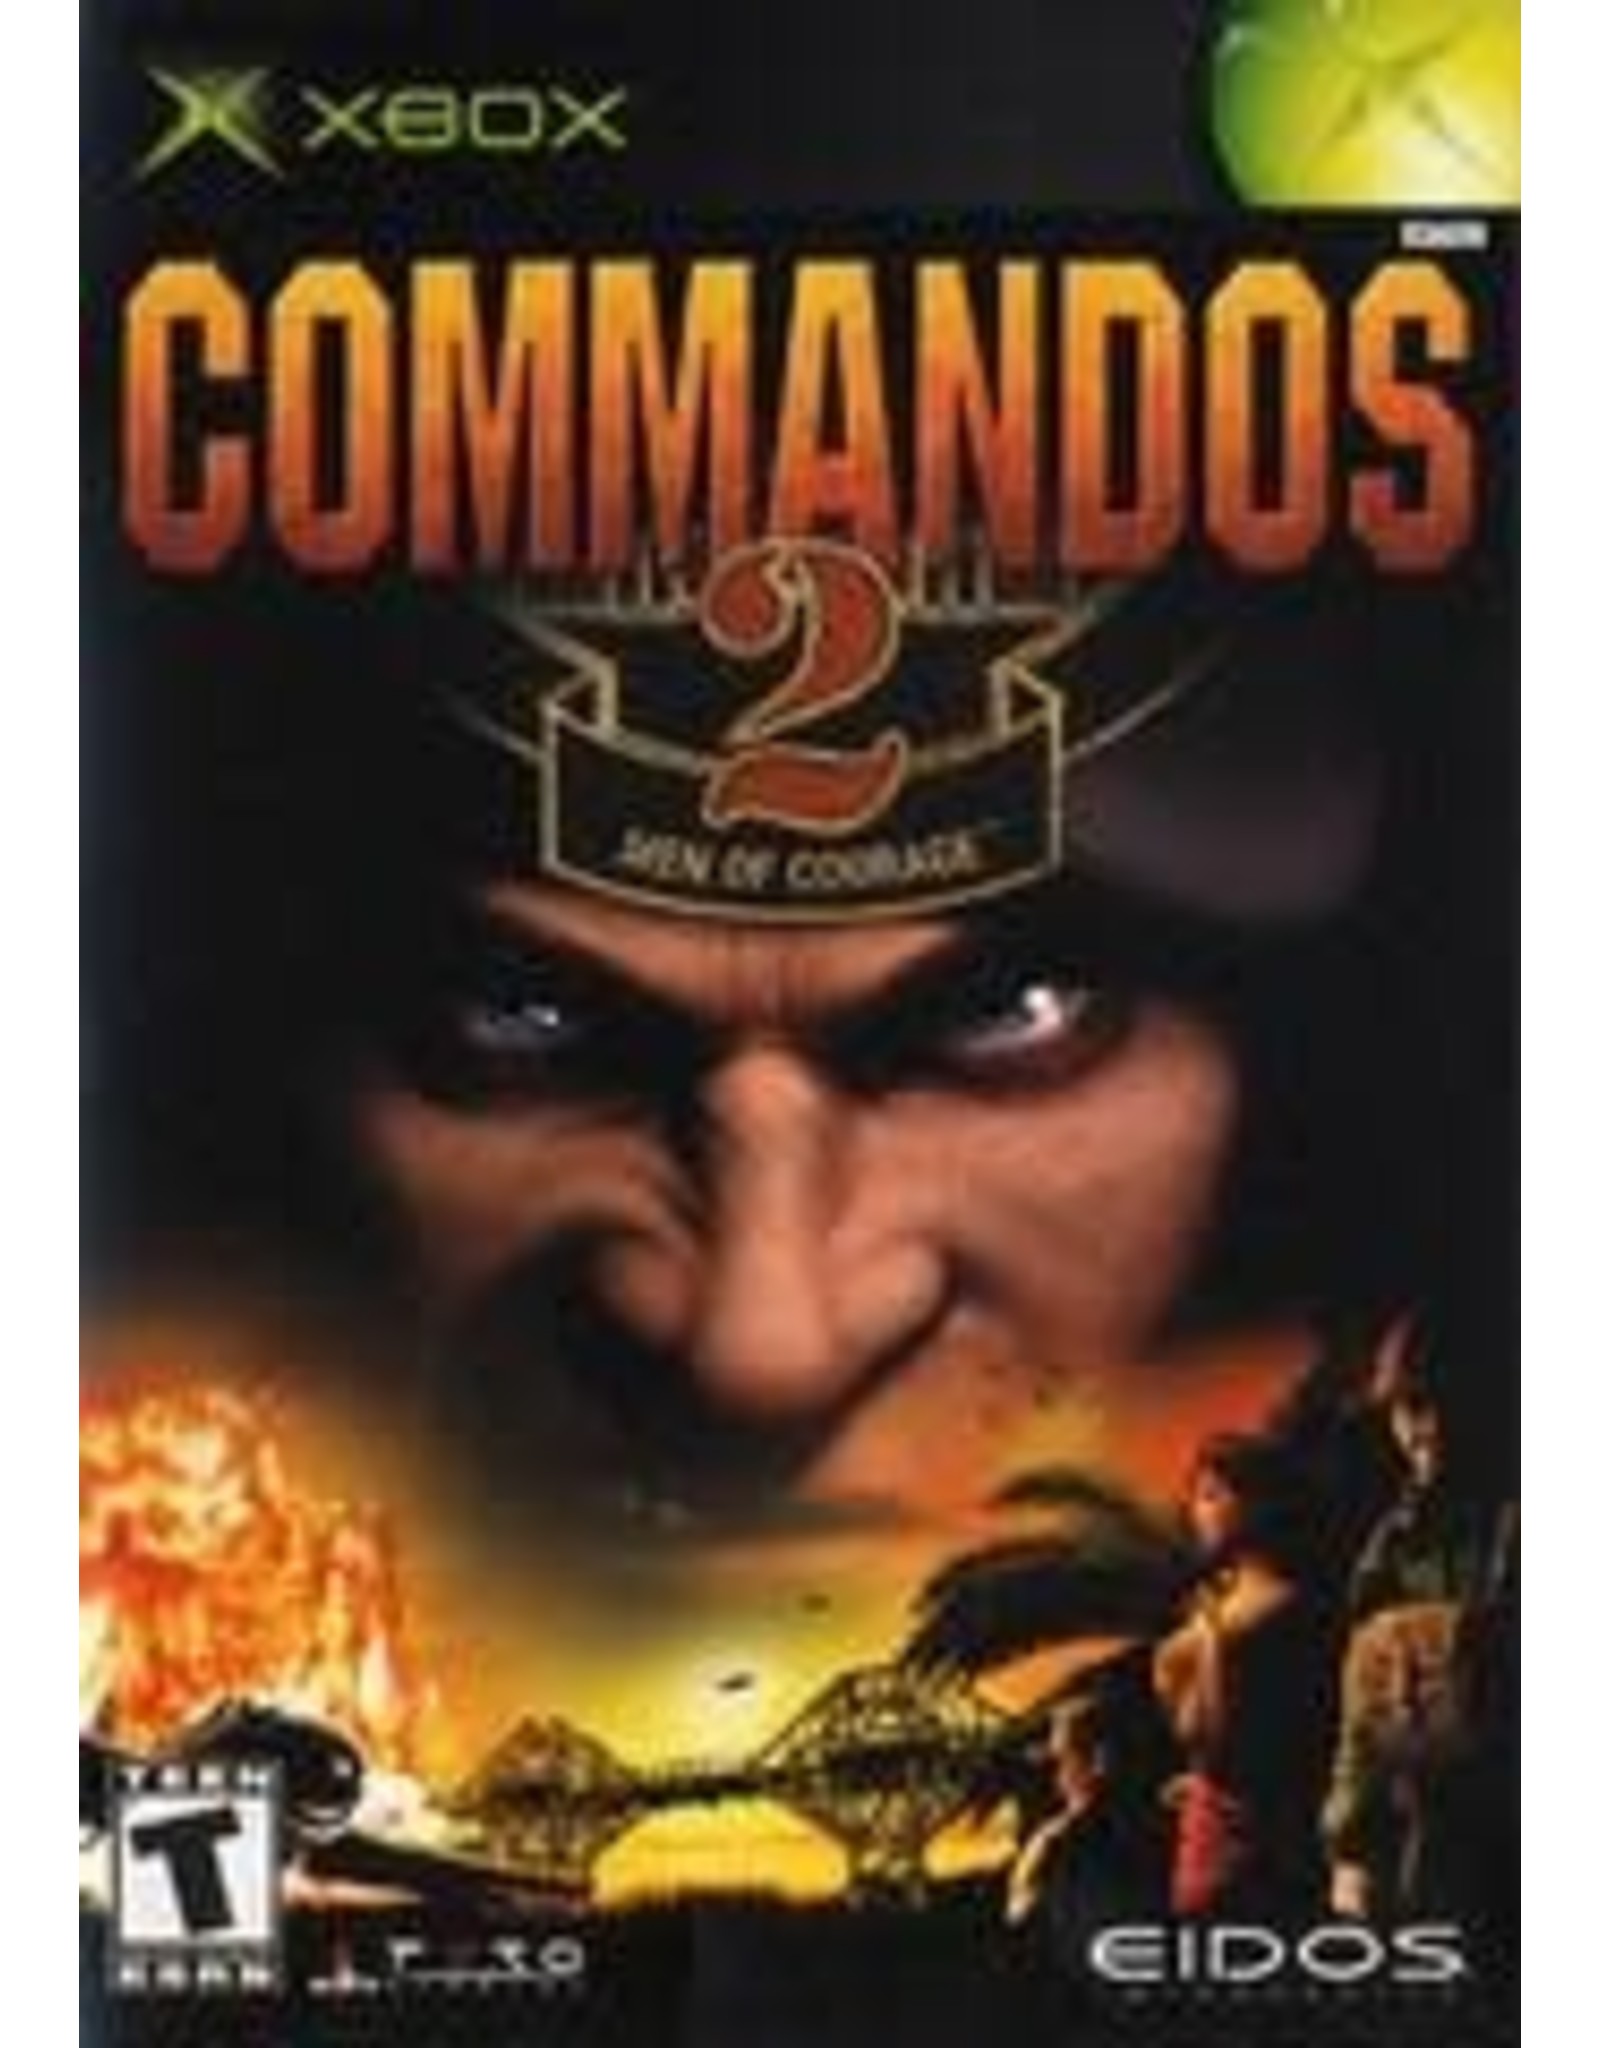 Xbox Commandos 2 Men of Courage (CiB)